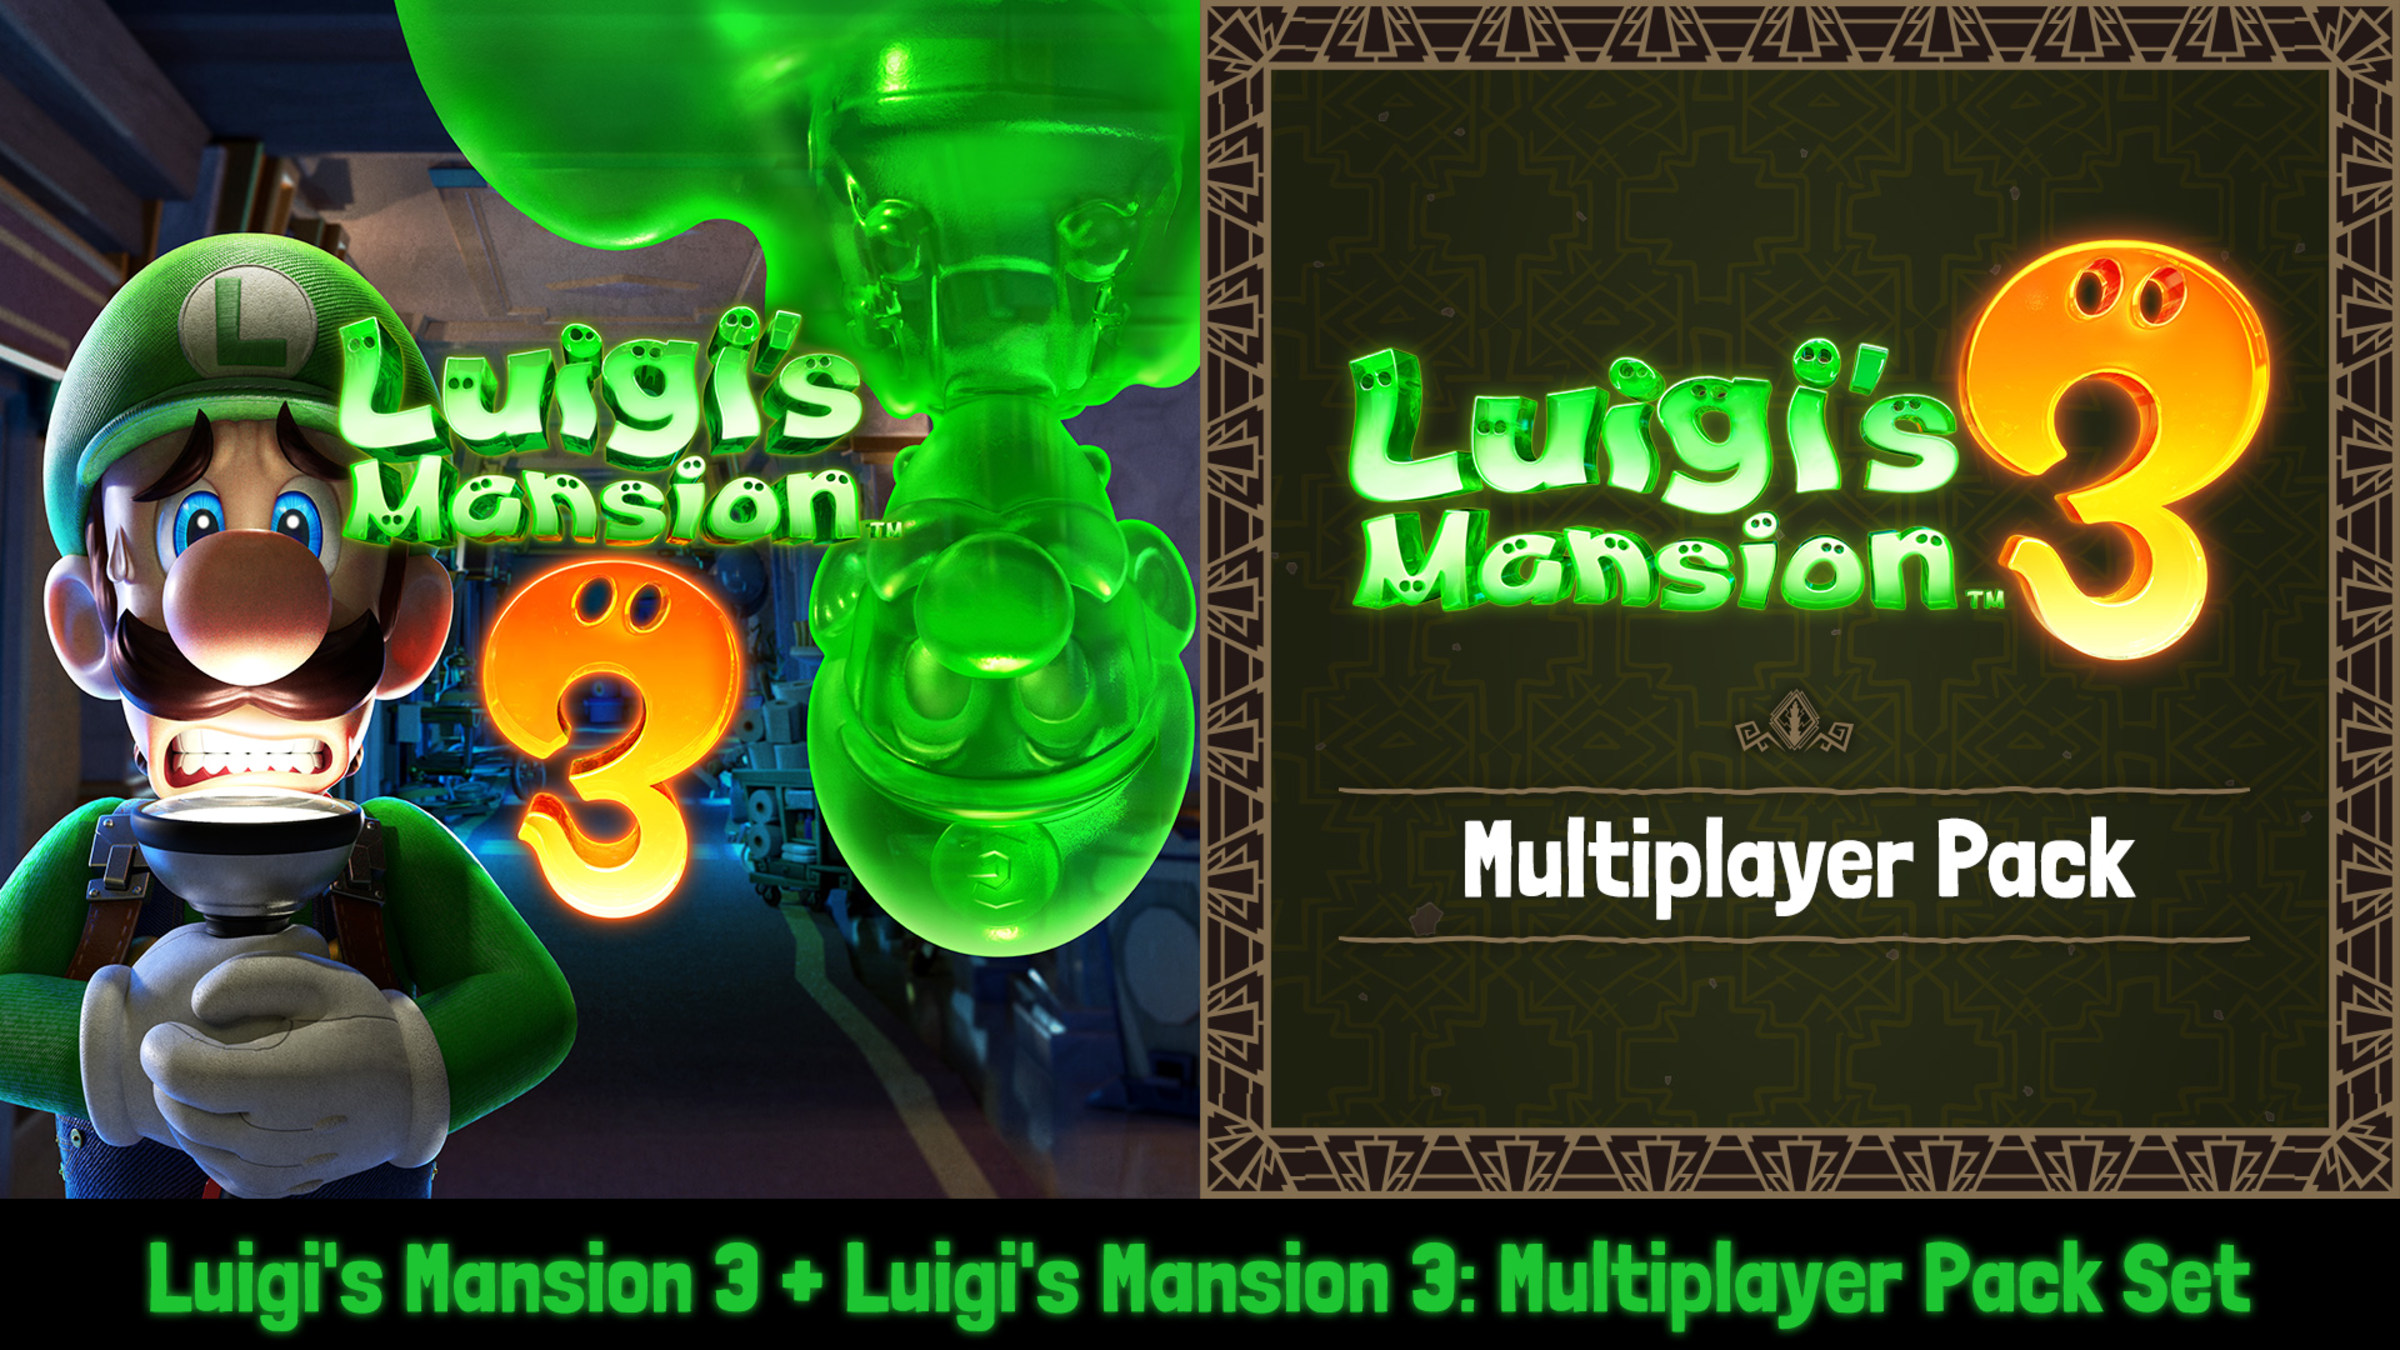 Luigi's Mansion™ 3 + Multiplayer Pack Set for Nintendo Switch